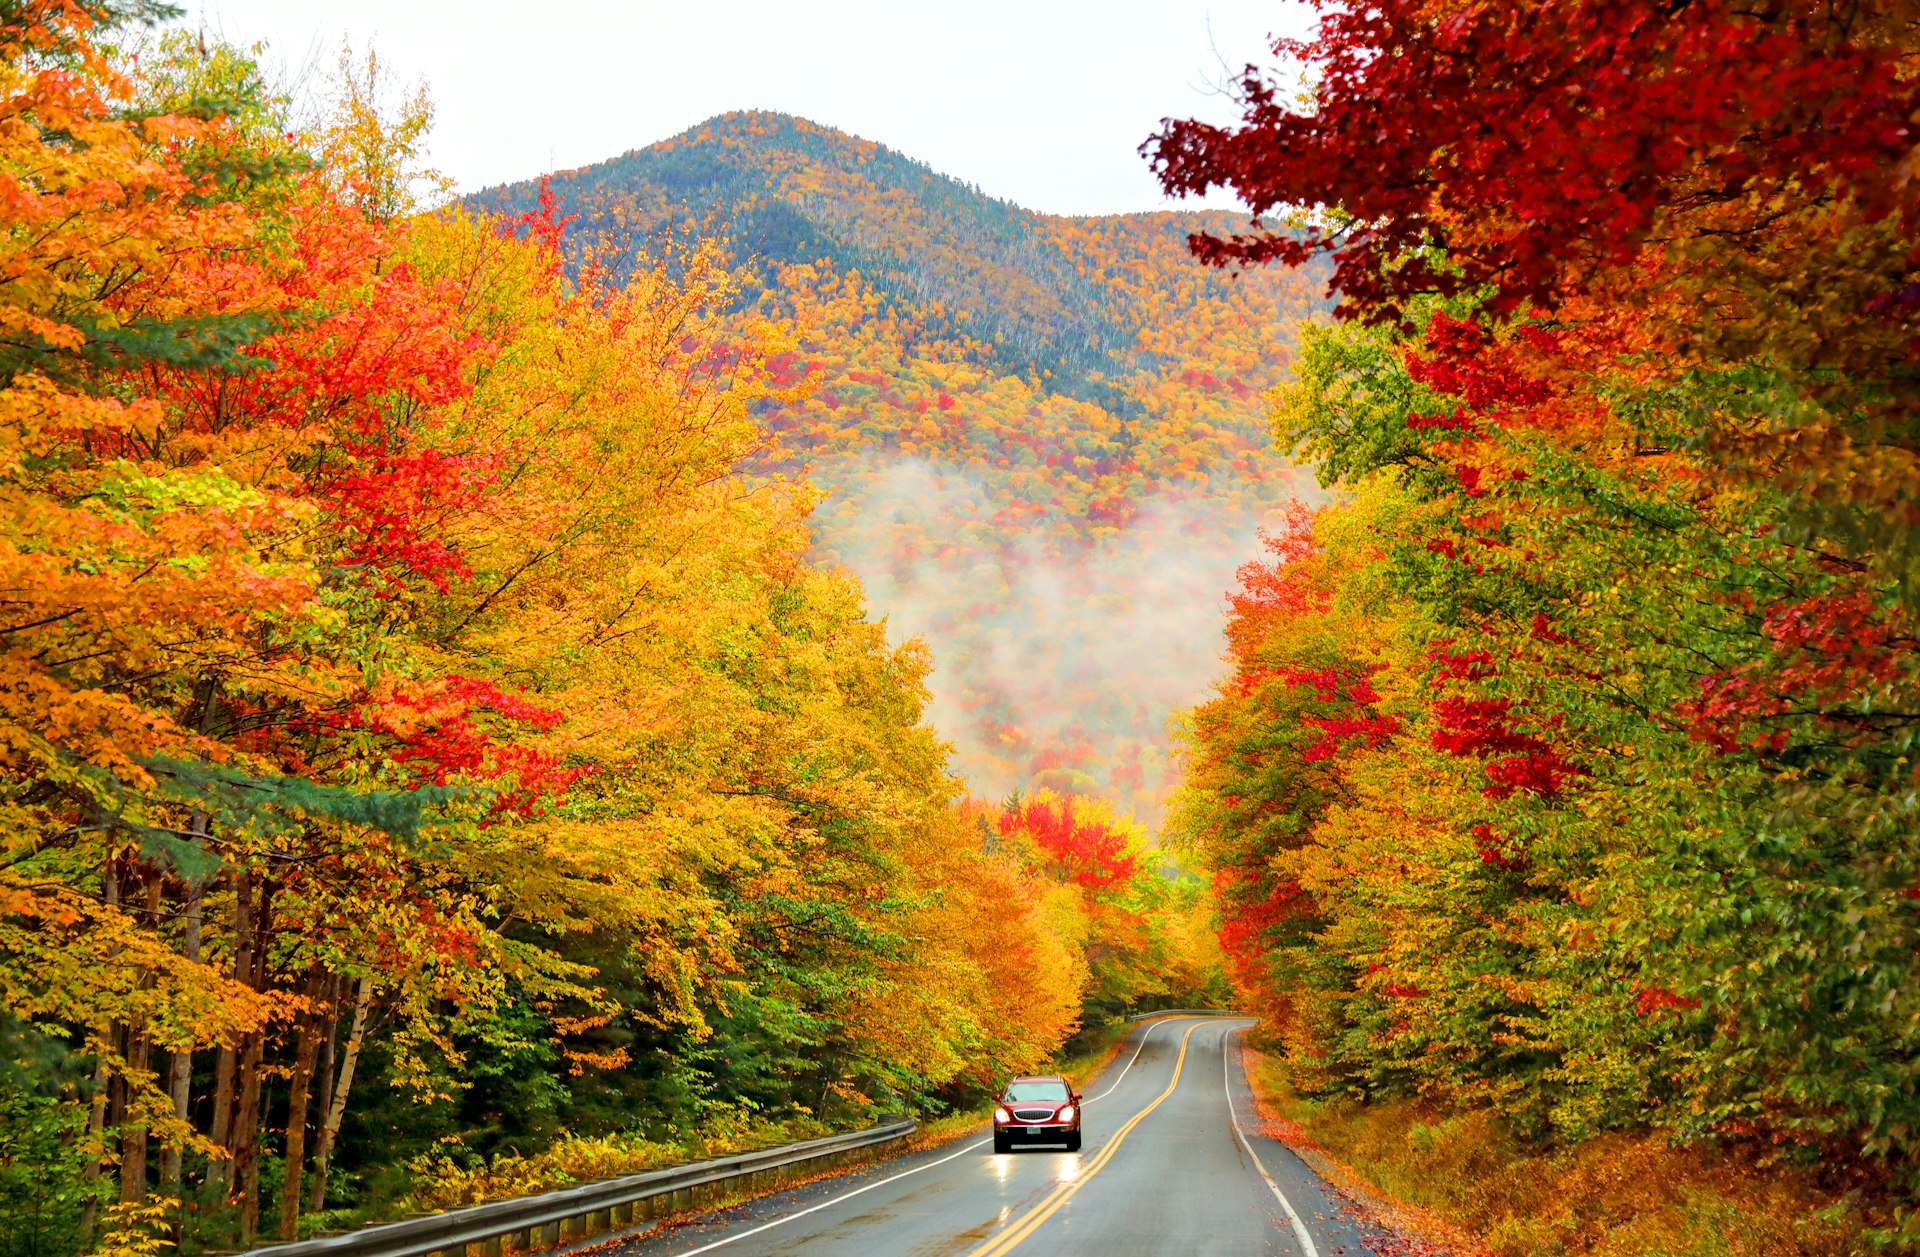 A car drives through fall foliage along the Kancamagus Highway, Northern New Hampshire, New England, USA